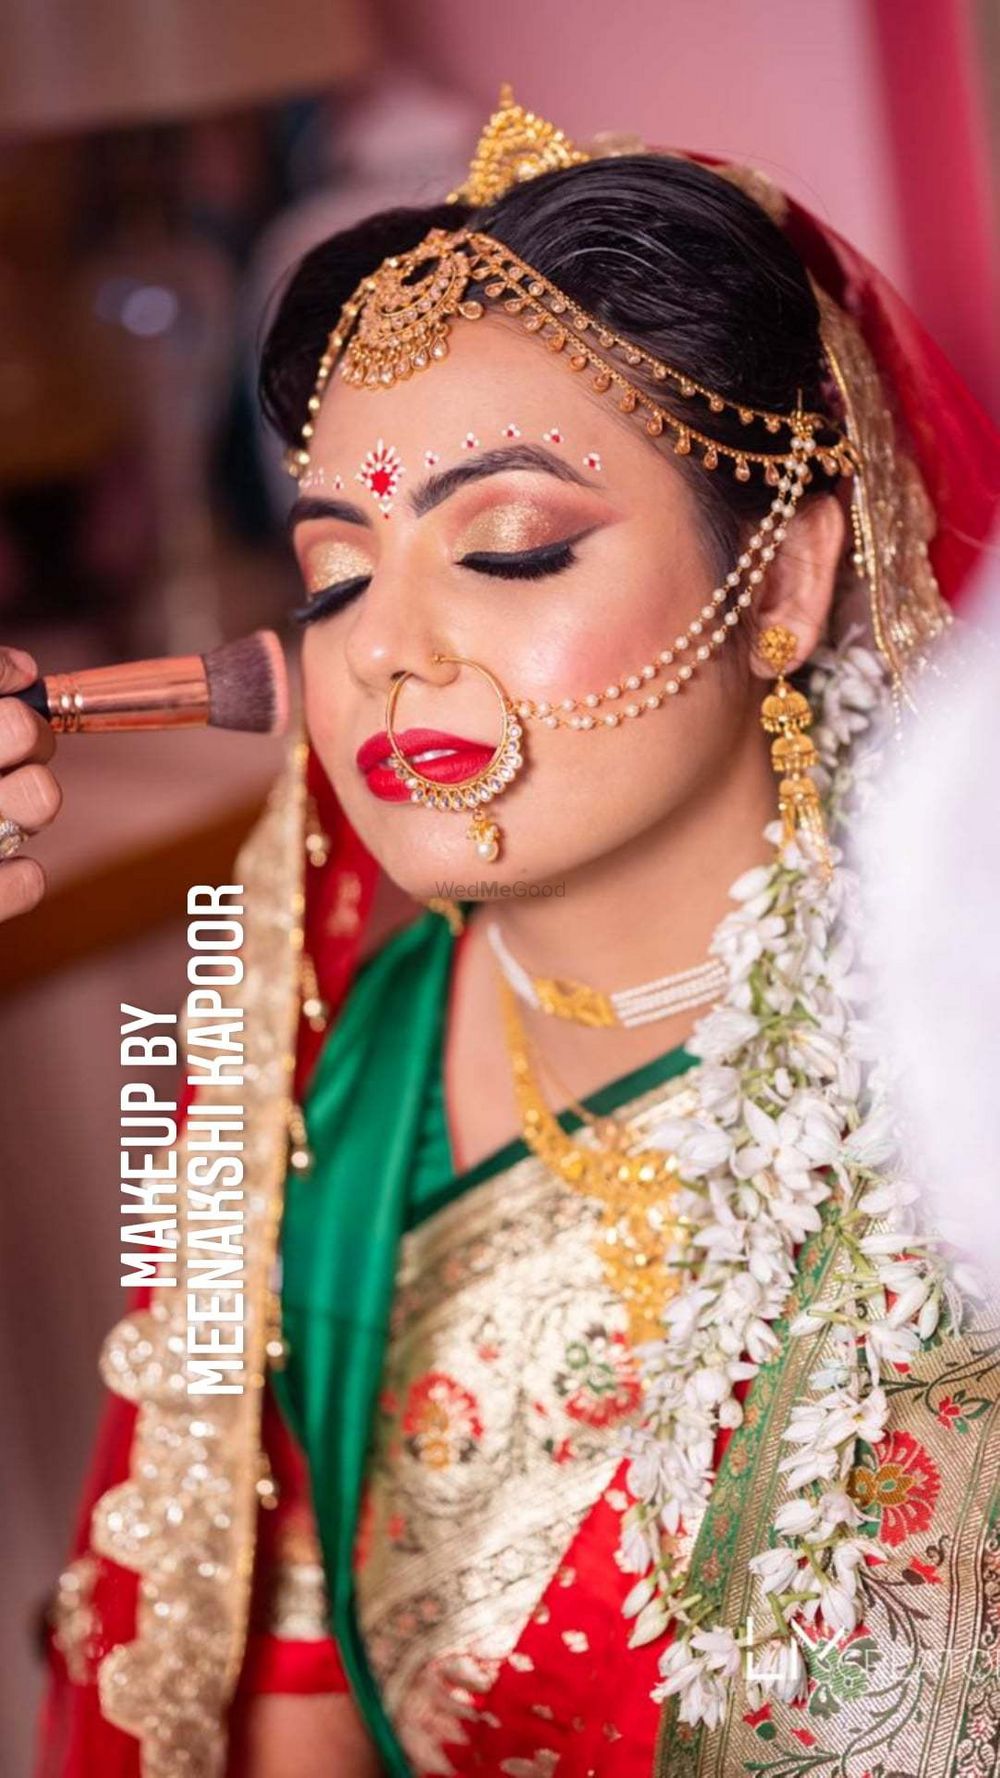 Photo By Makeup By Meenakshi Kapoor - Bridal Makeup